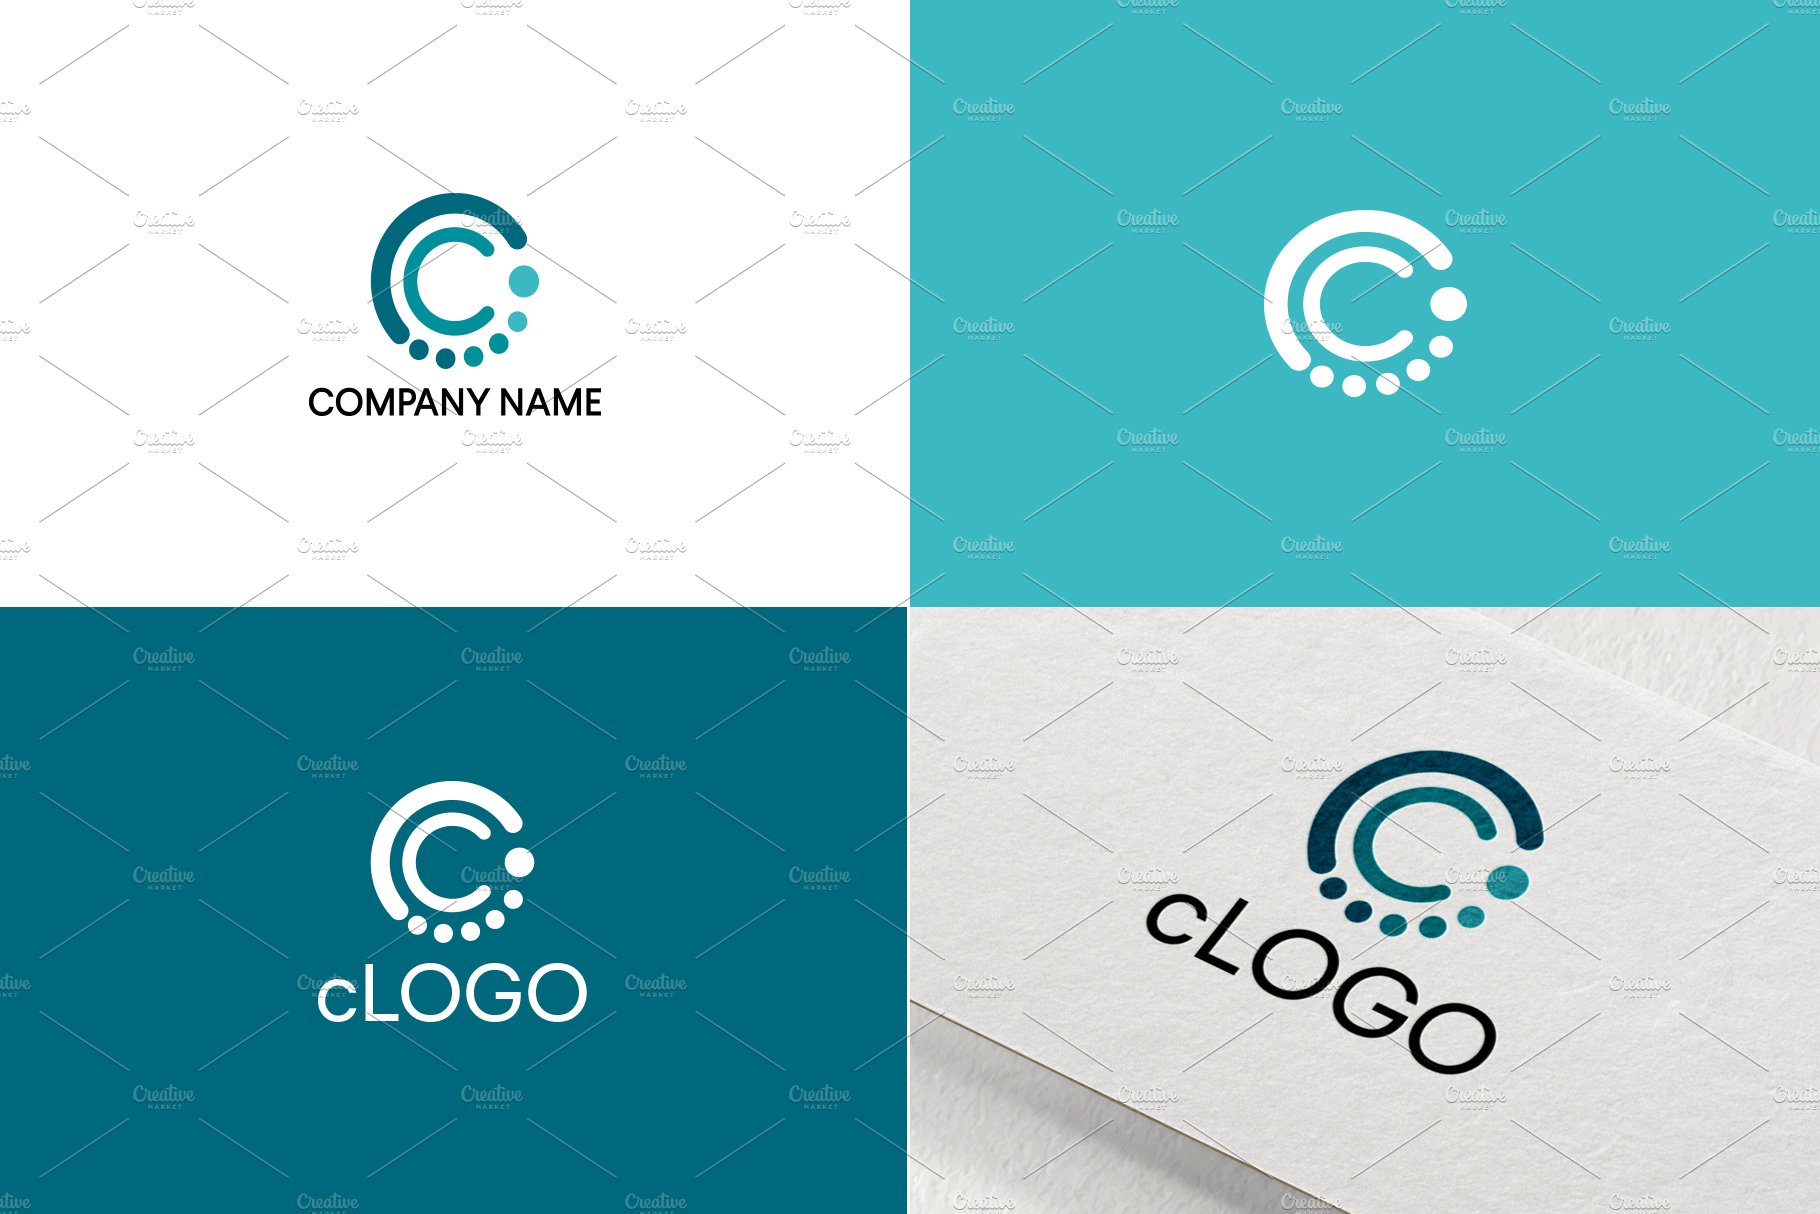 Letter C logo design preview image.